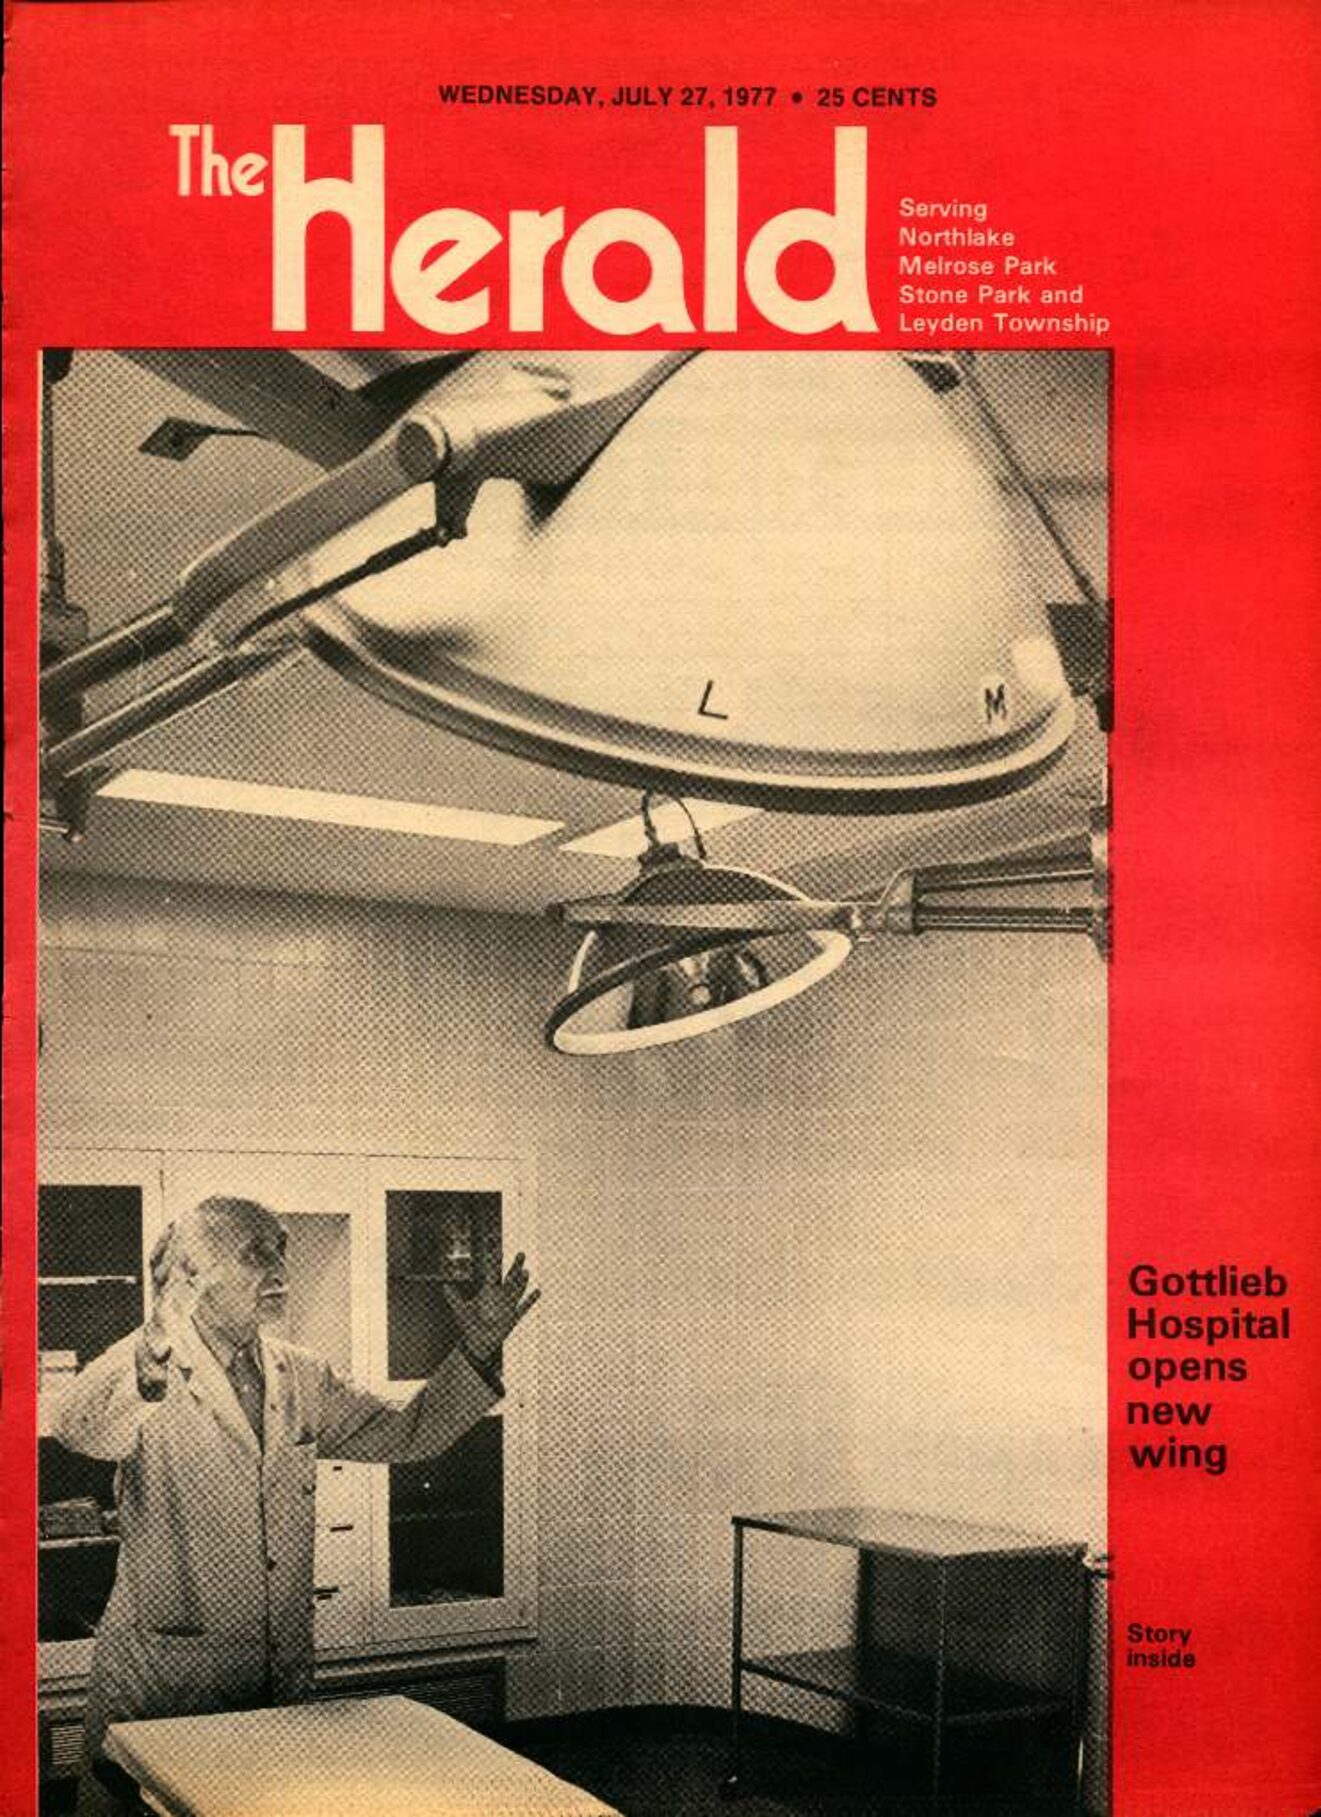 The Herald – 19770727